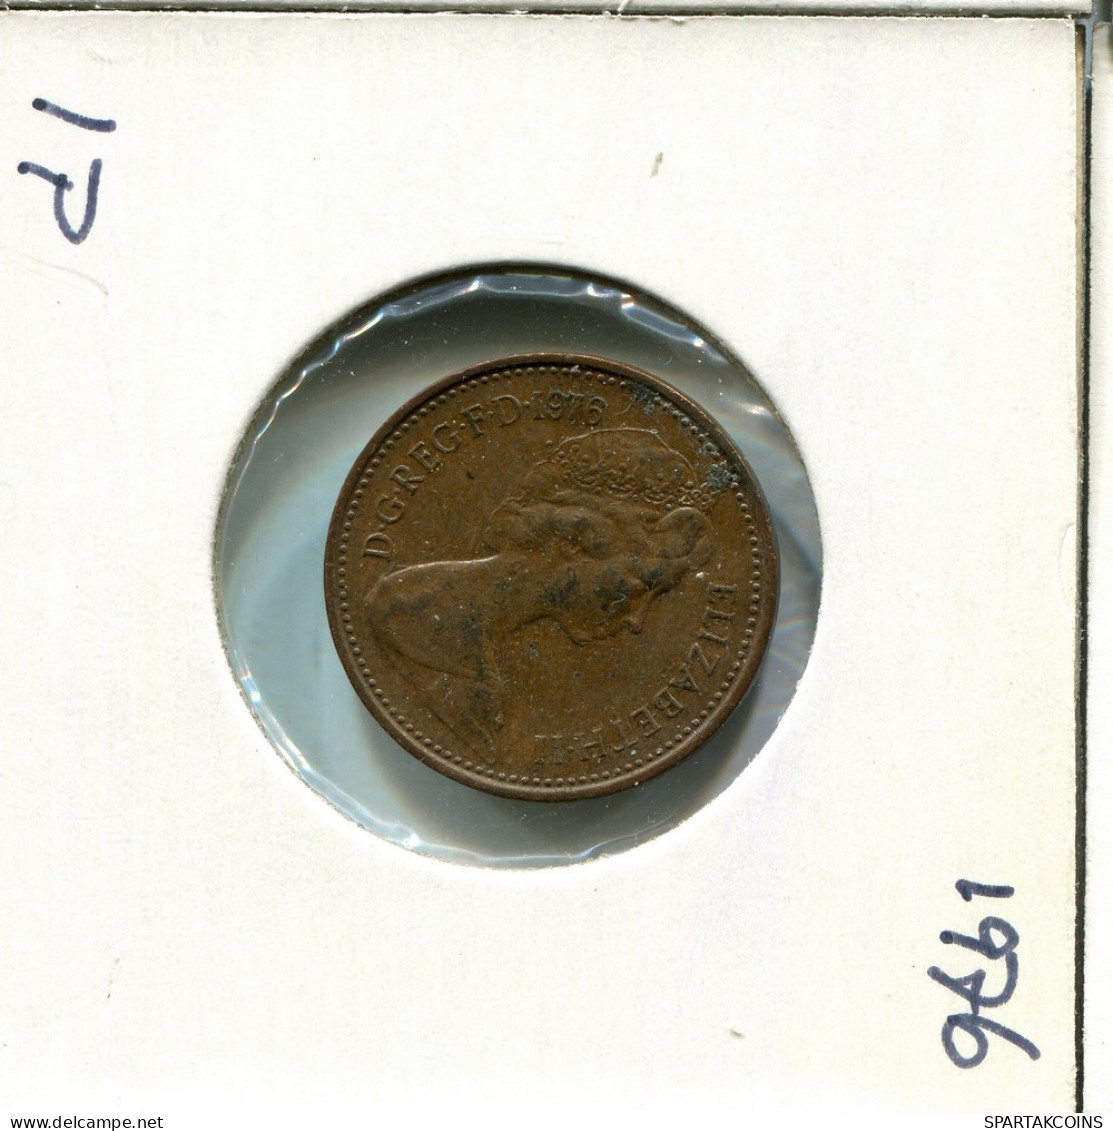 NEW PENNY 1976 UK GROßBRITANNIEN GREAT BRITAIN Münze #AU803.D.A - 1 Penny & 1 New Penny